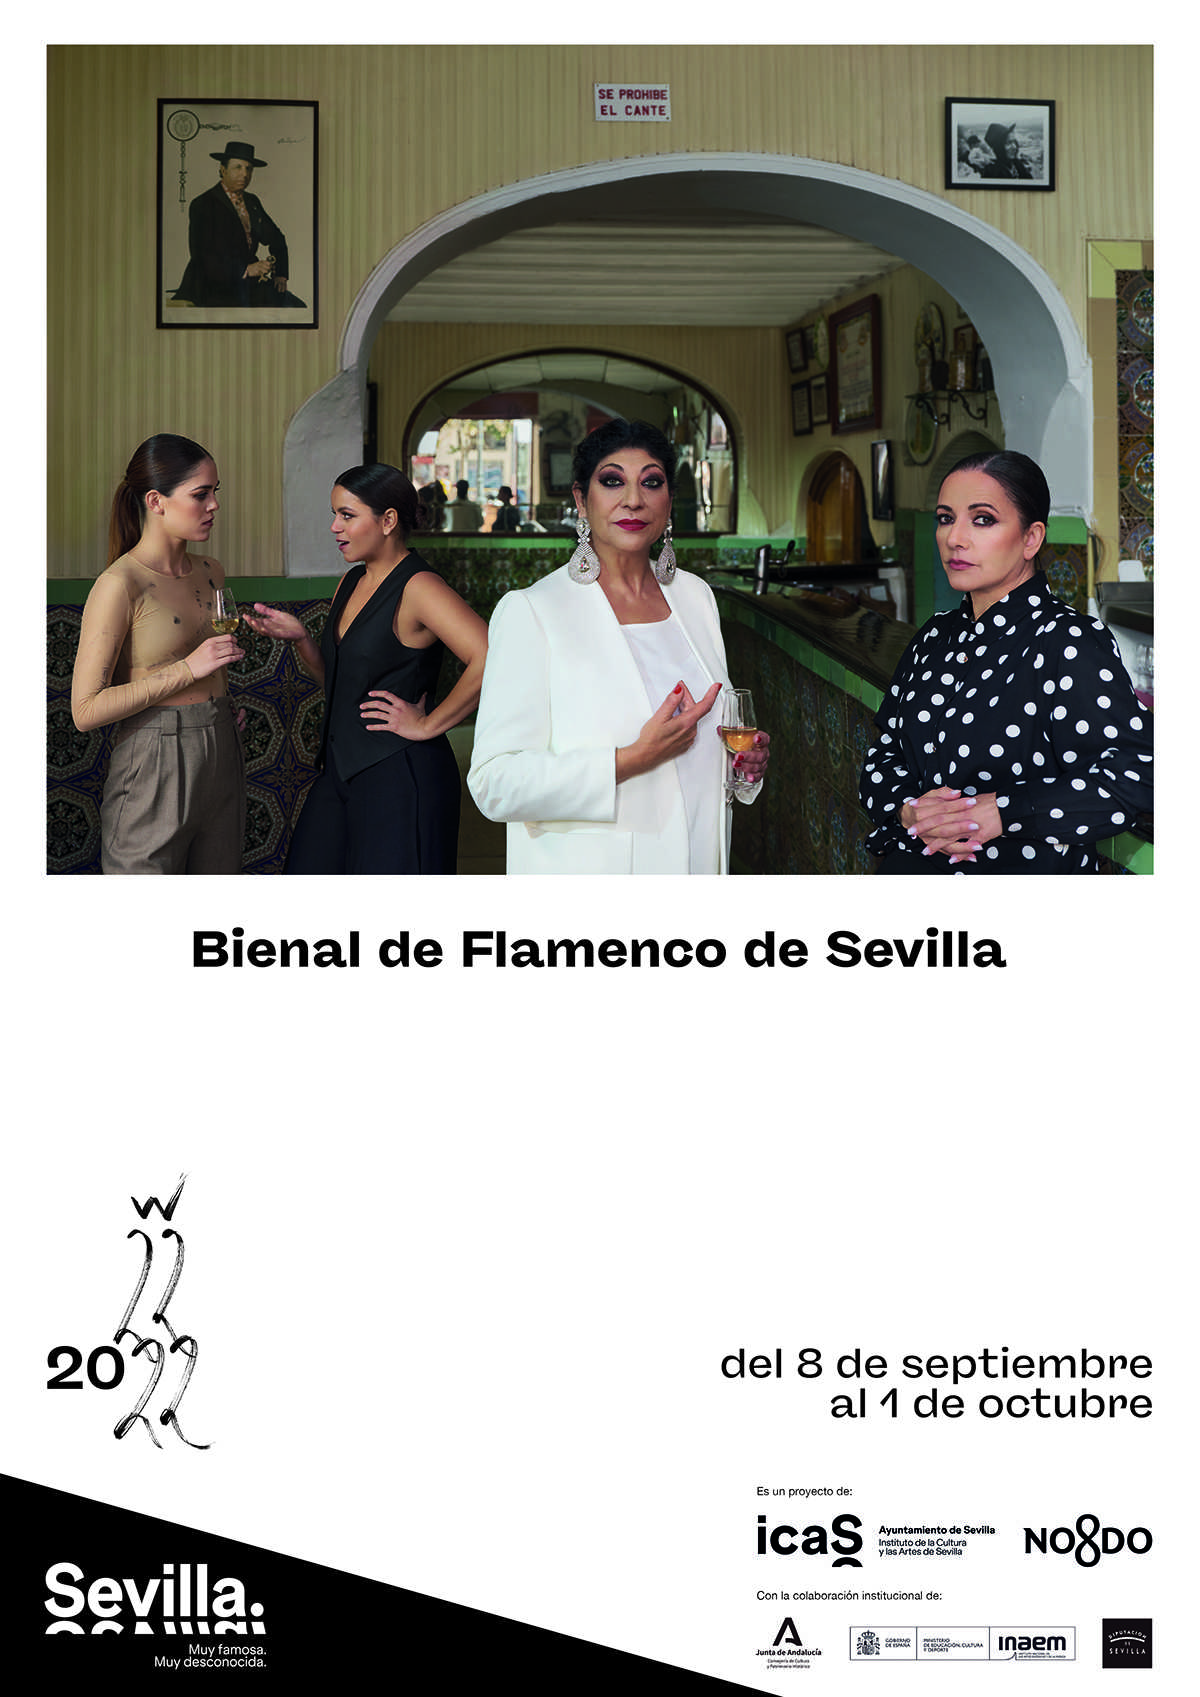 Bienal de Flamenco de Sevilla